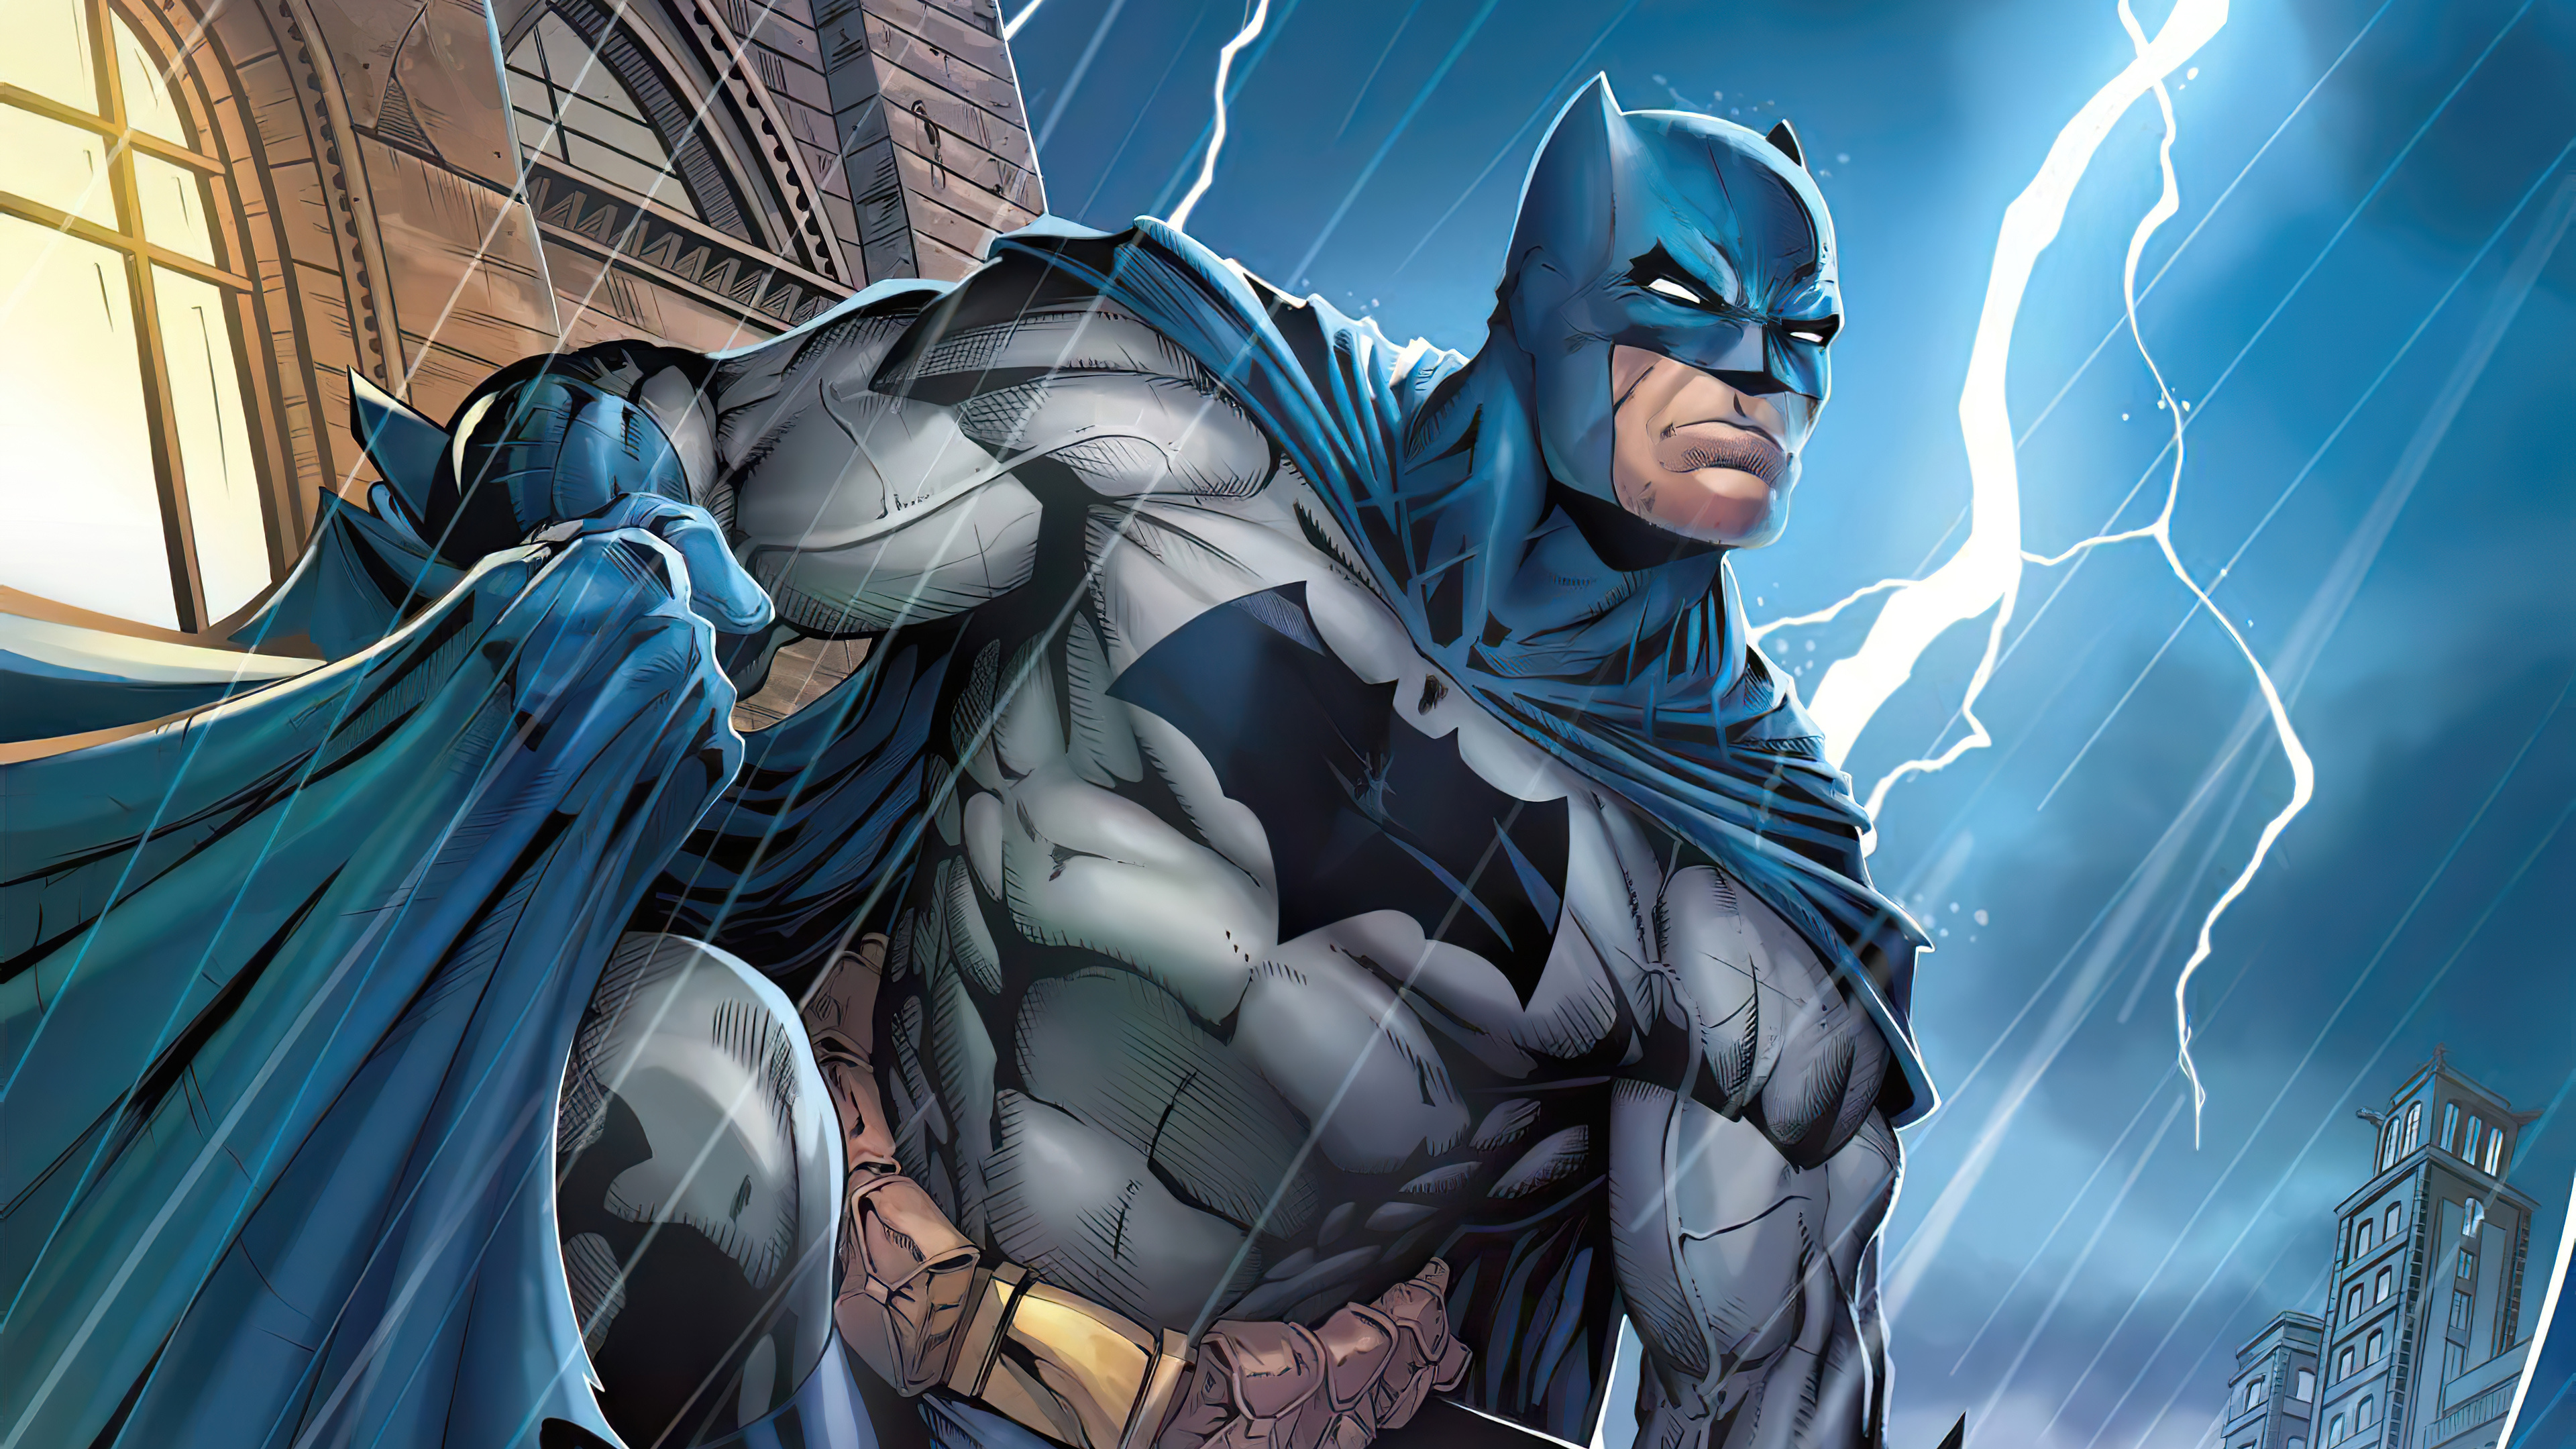 Gotham under storm, Batman silhouette, Dark and dramatic, Lightning backdrop, DC Comics, 3840x2160 4K Desktop